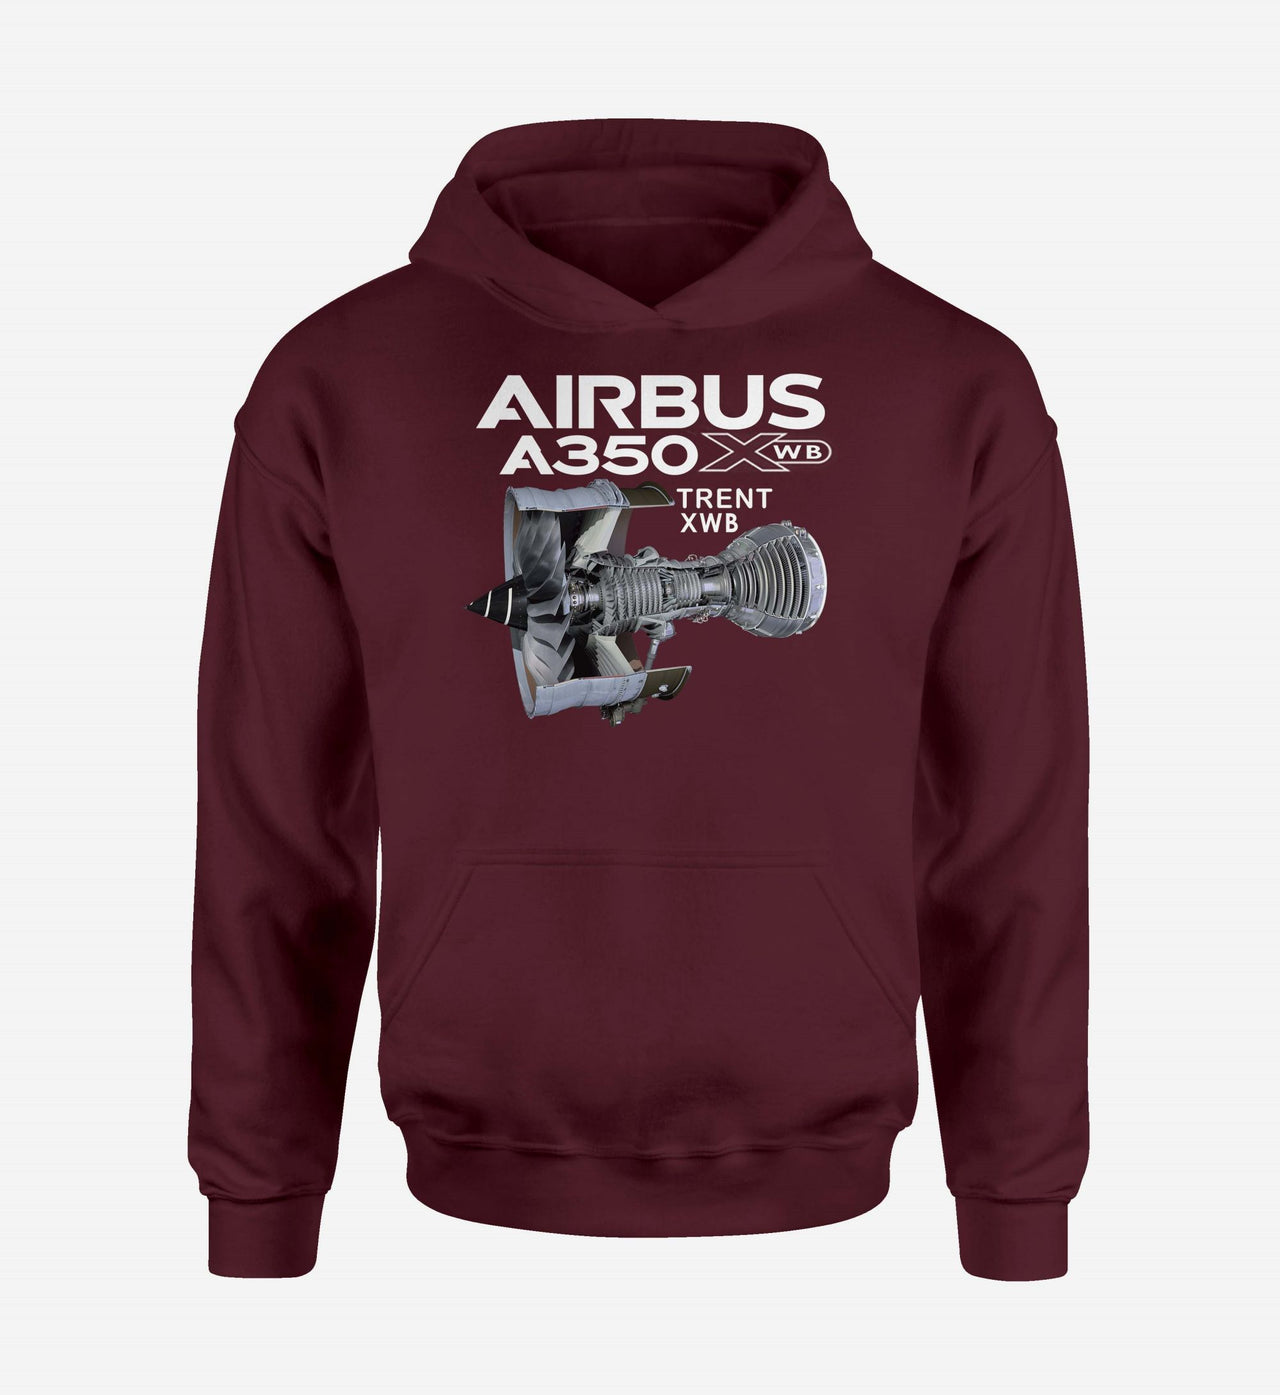 Airbus A350 & Trent Wxb Engine Designed Hoodies